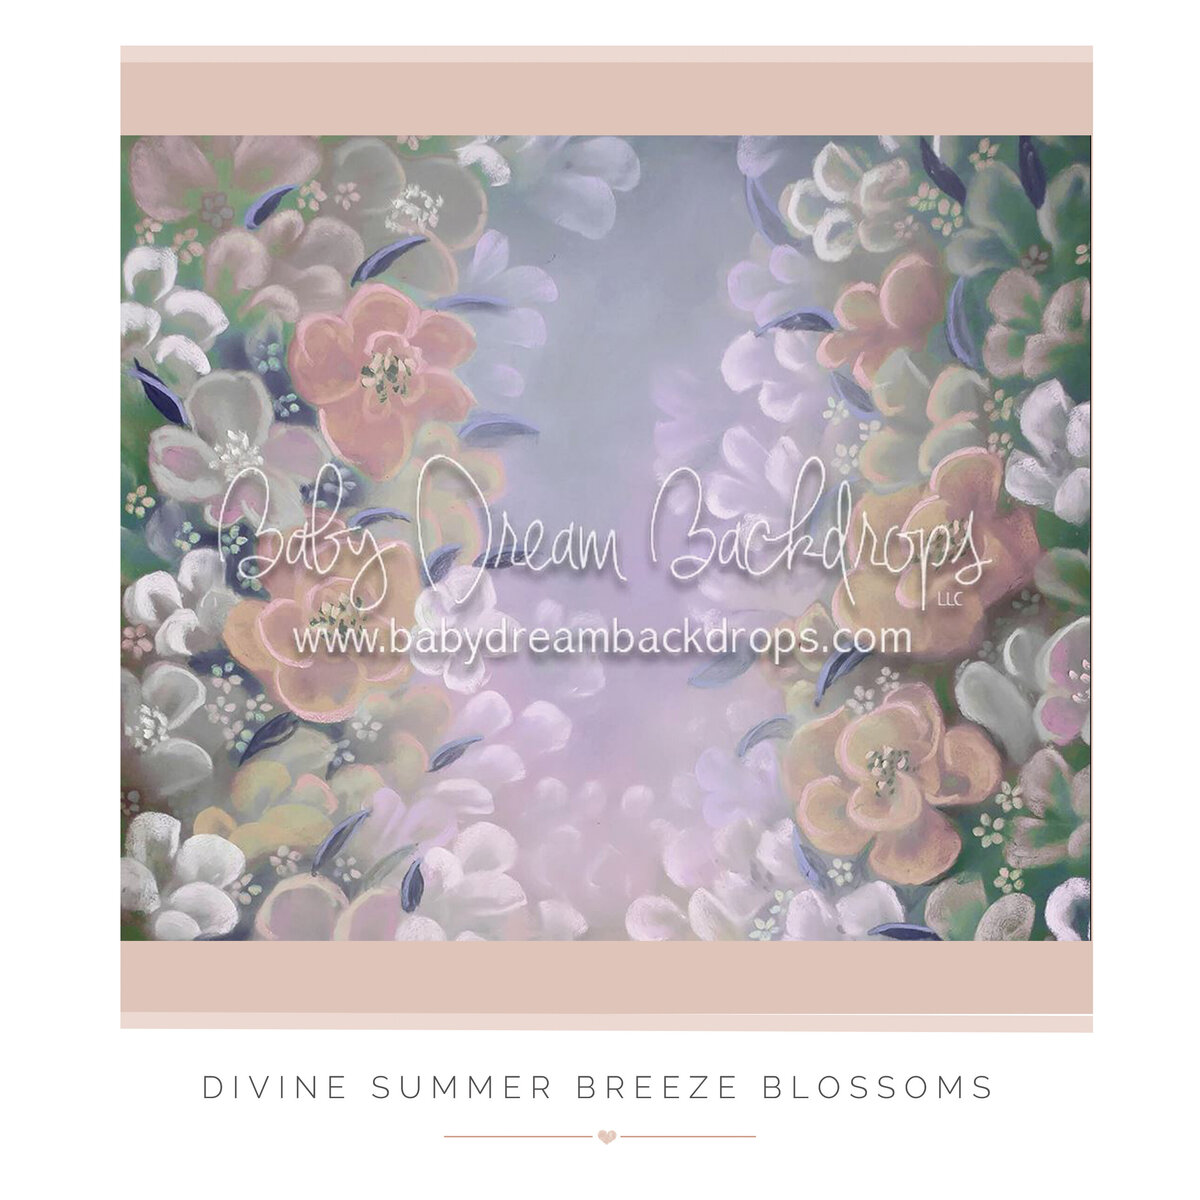 Divine Summer Breeze Blossoms